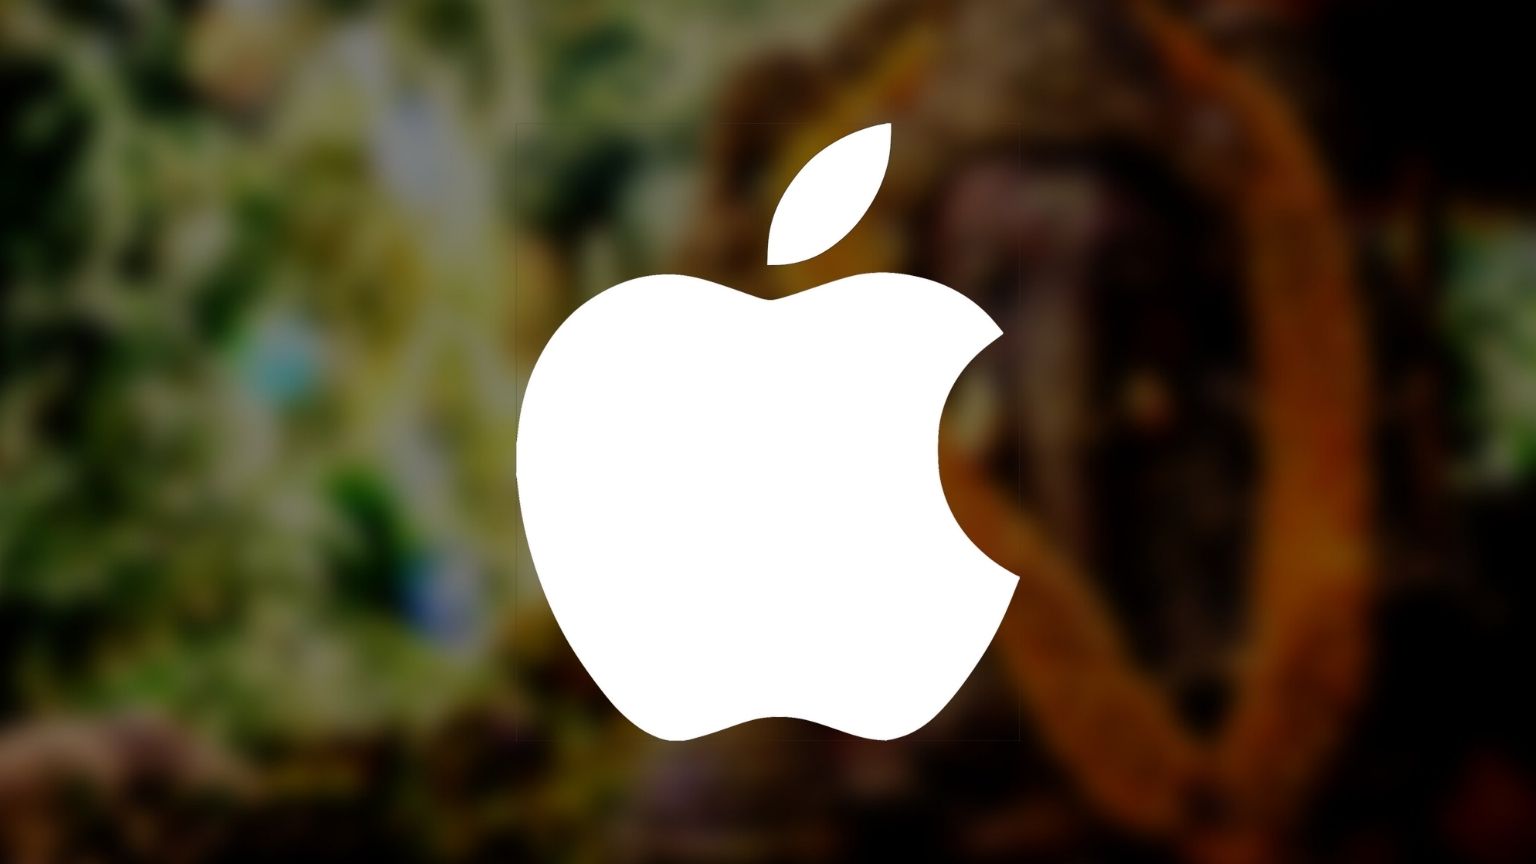 India investigates Apple’s App Store practices on antitrust grounds